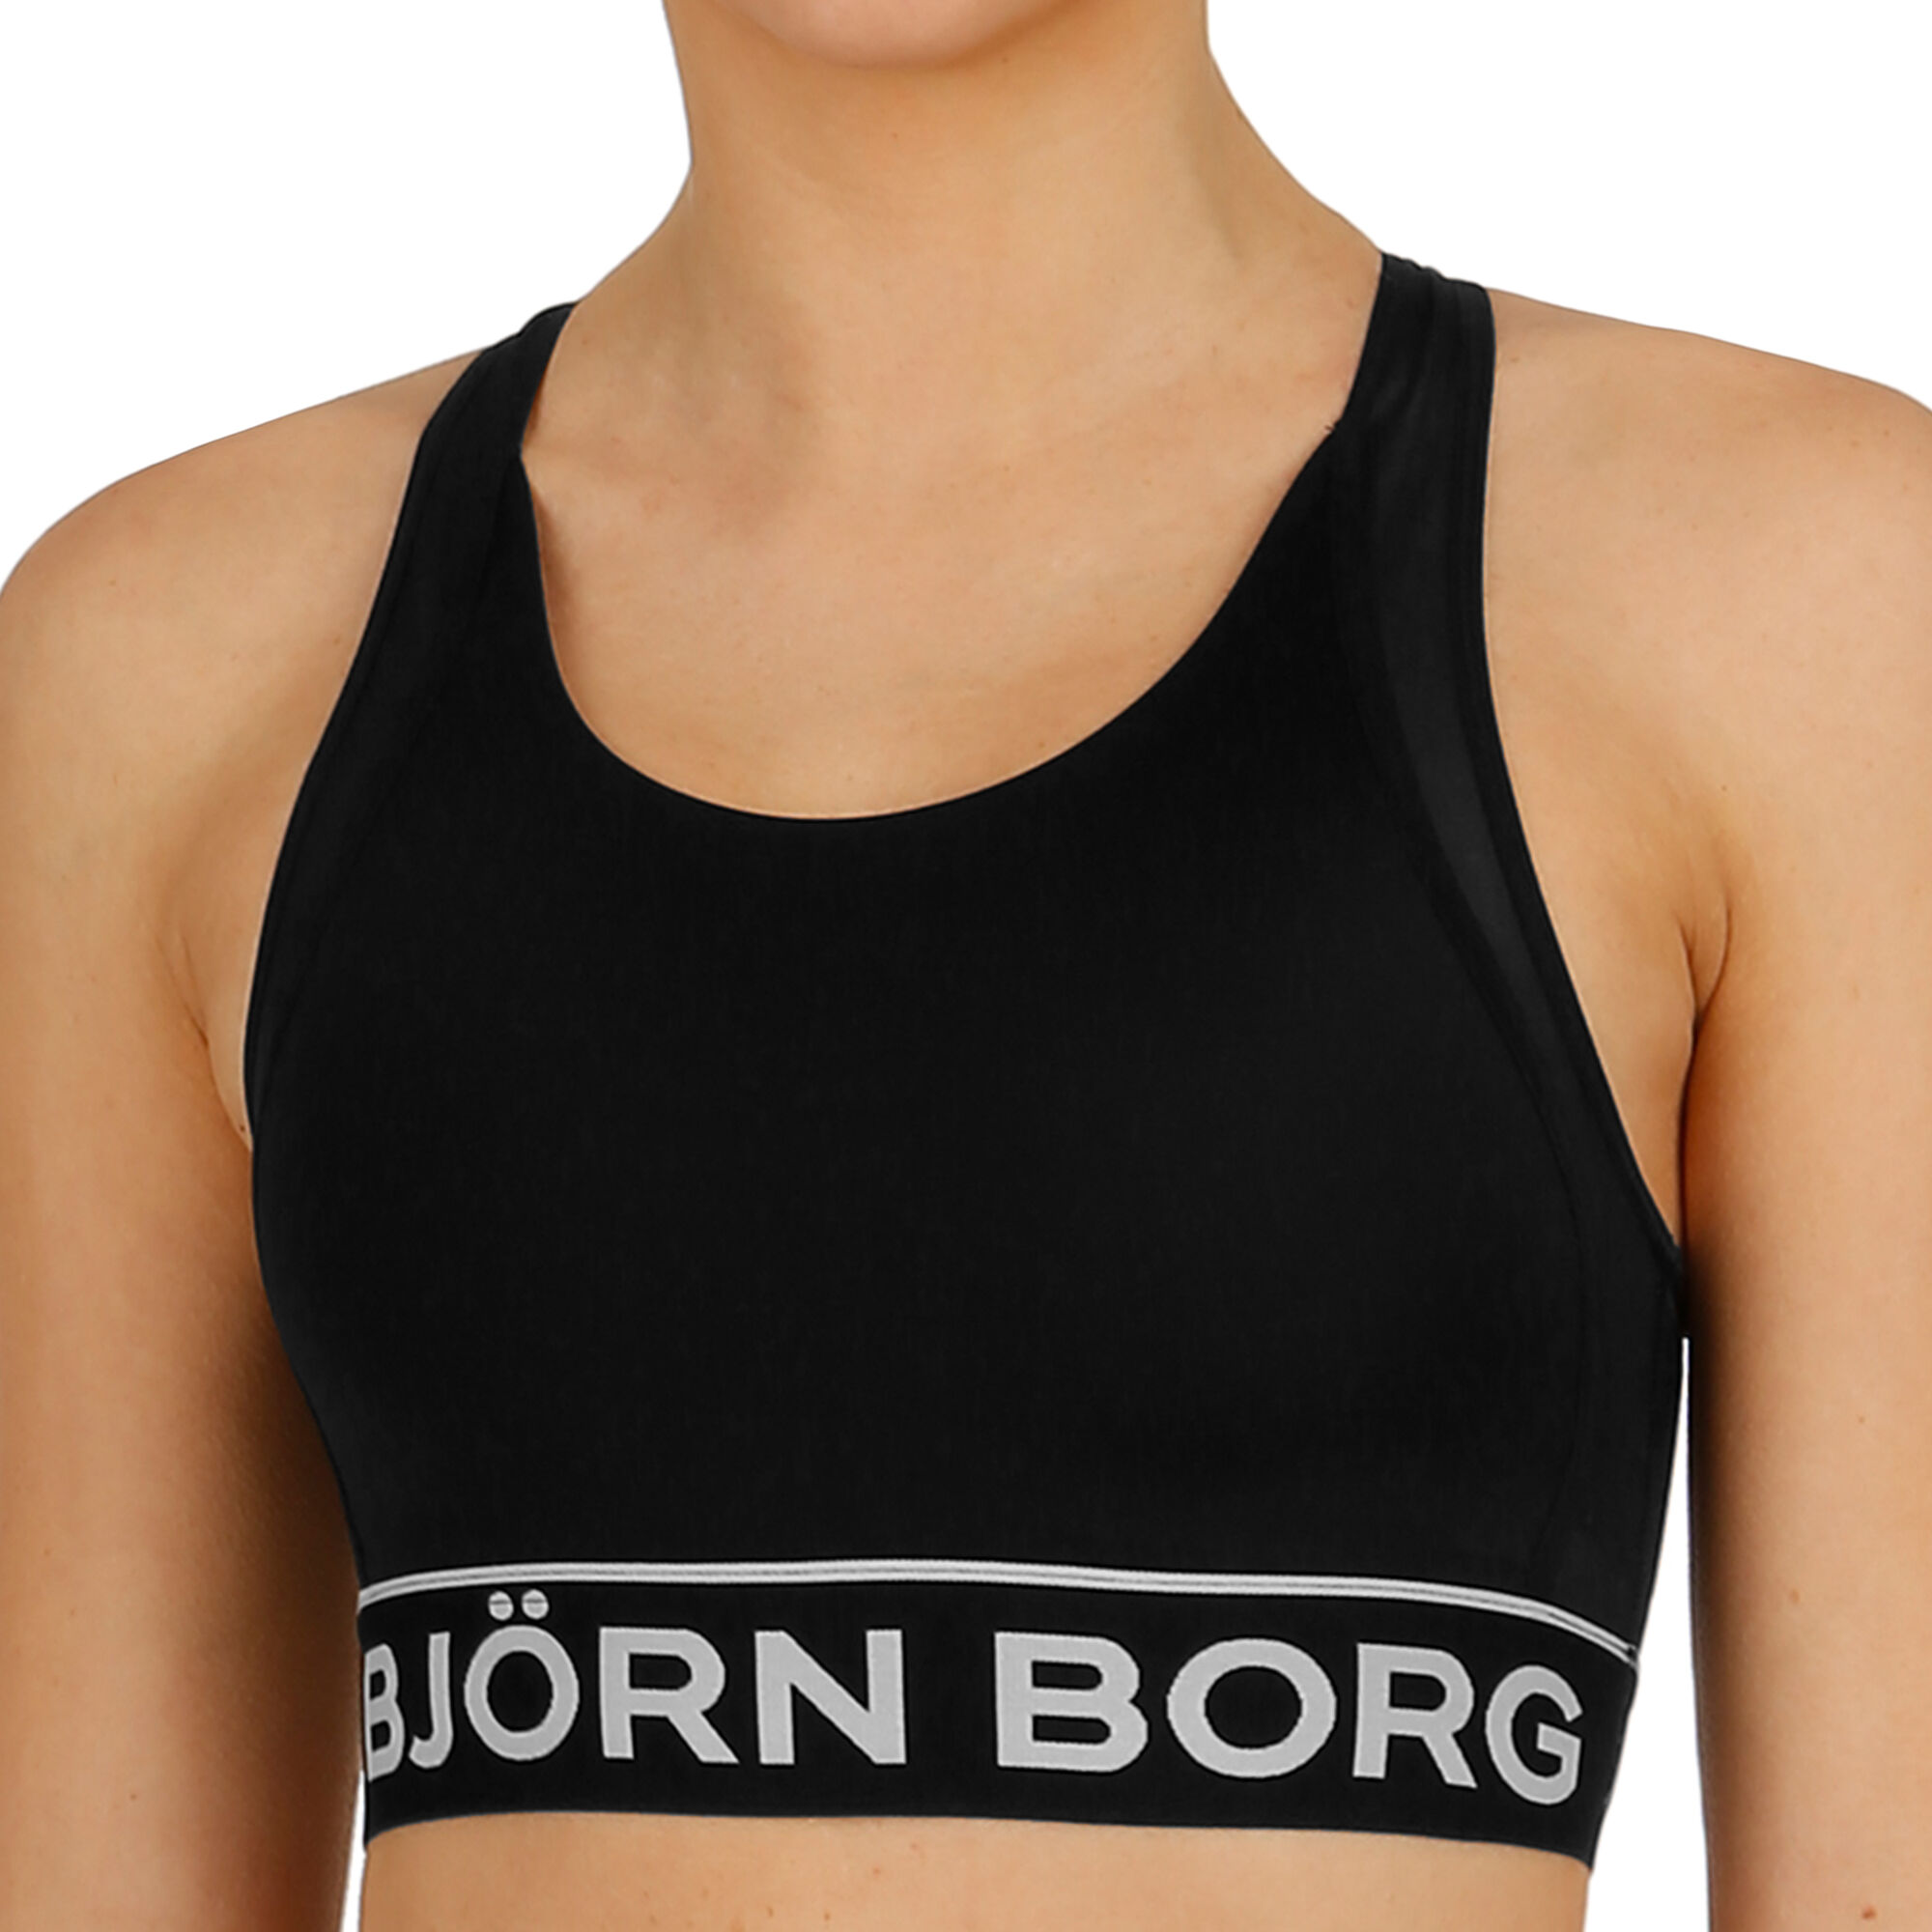 Buy Björn Borg Noos Solids Bianca Sports Bras Women Black, White